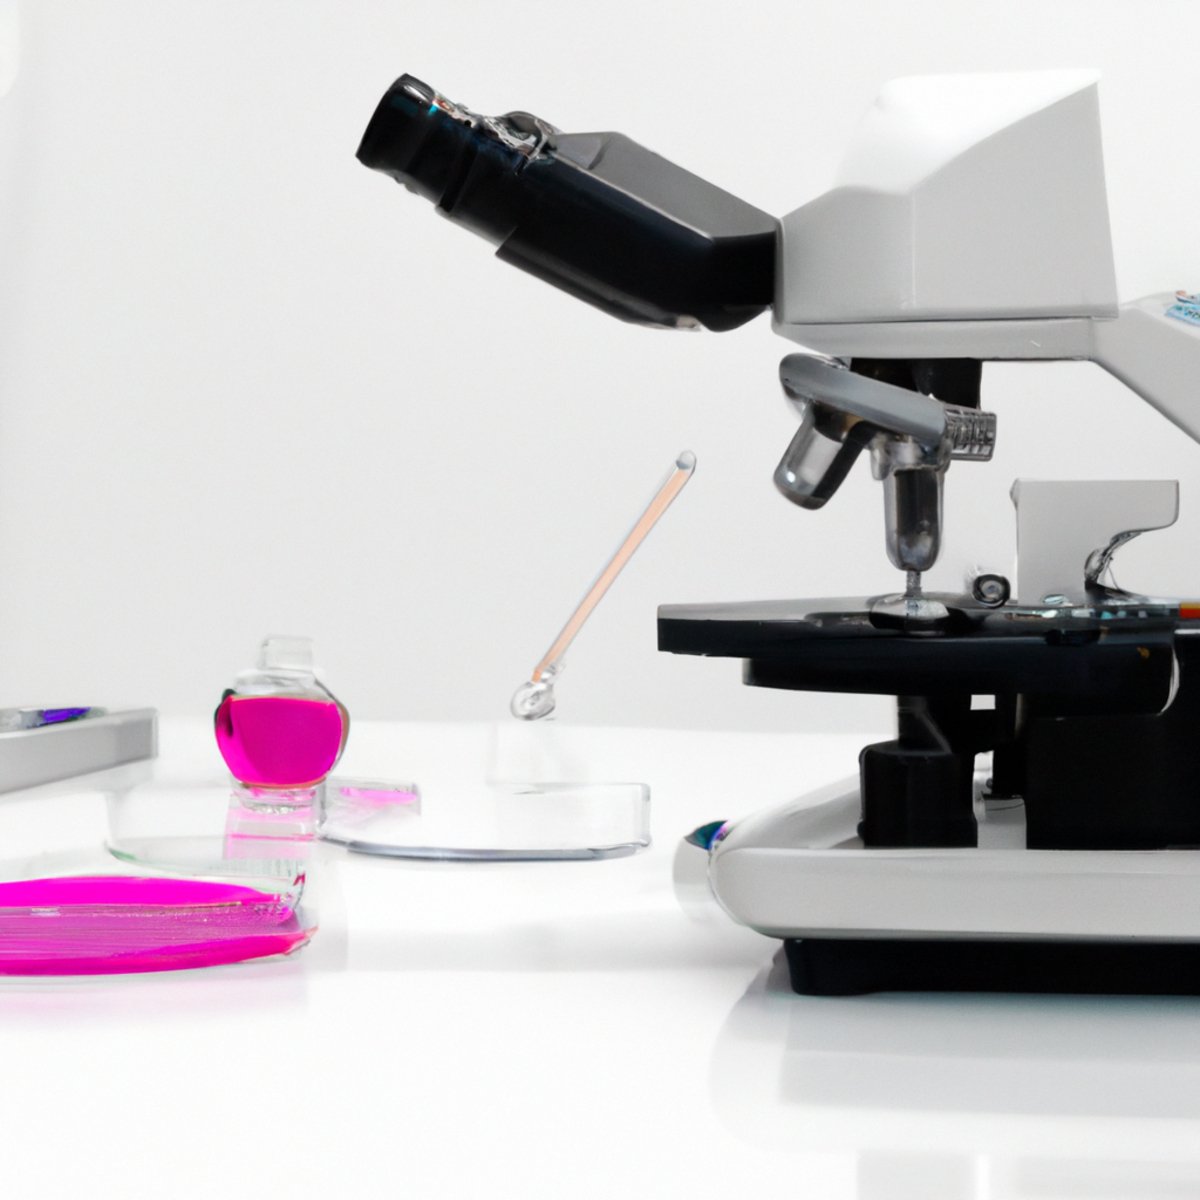 Scientific lab with microscope, petri dish, and pipette, symbolizing tumor cell investigation for Gastrointestinal stromal tumor (GIST)treatment research.